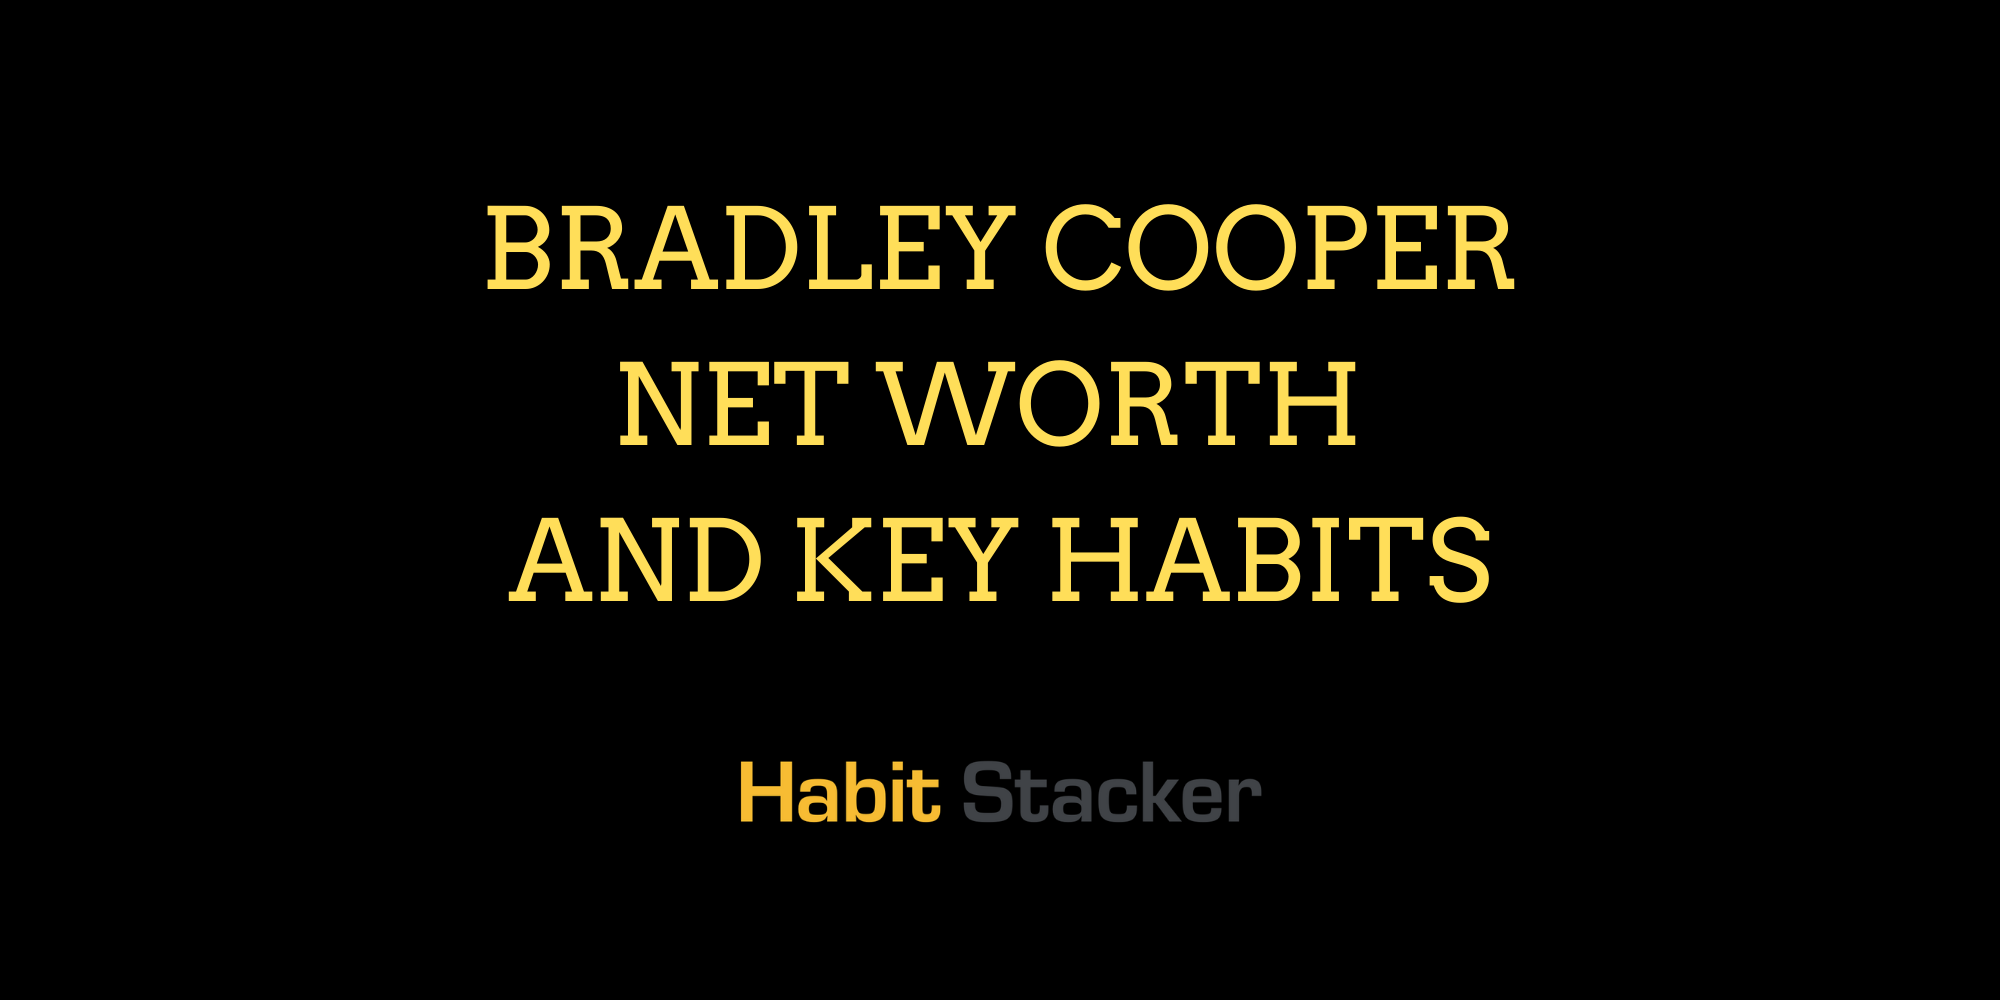 Bradley Cooper Net Worth